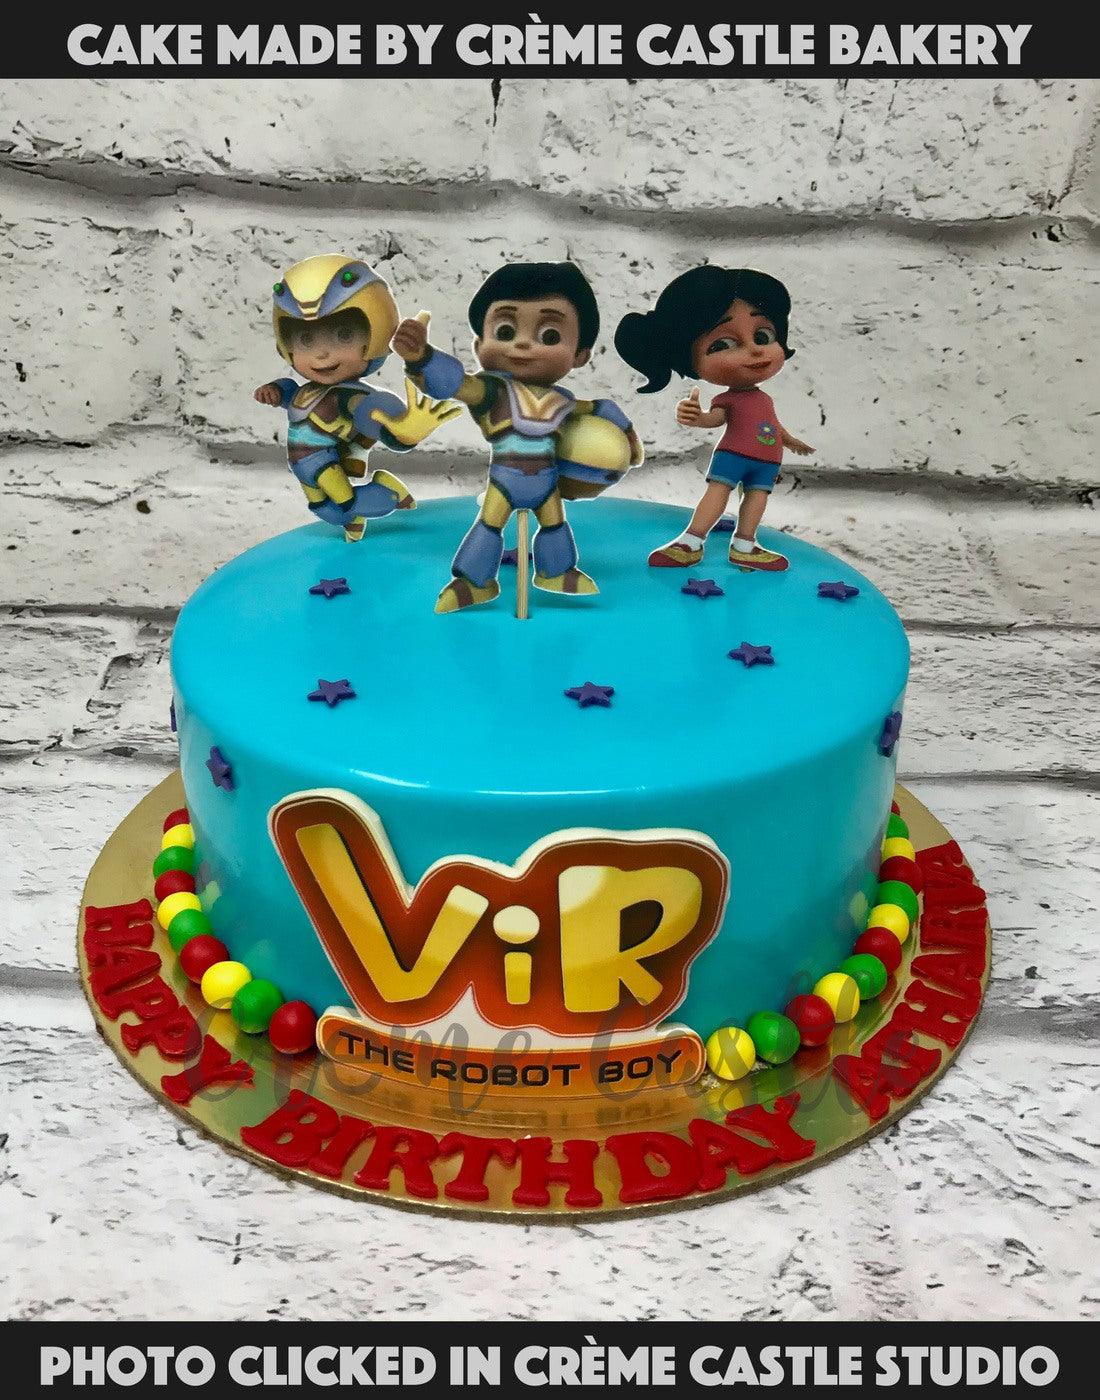 Share more than 72 birthday cake veer